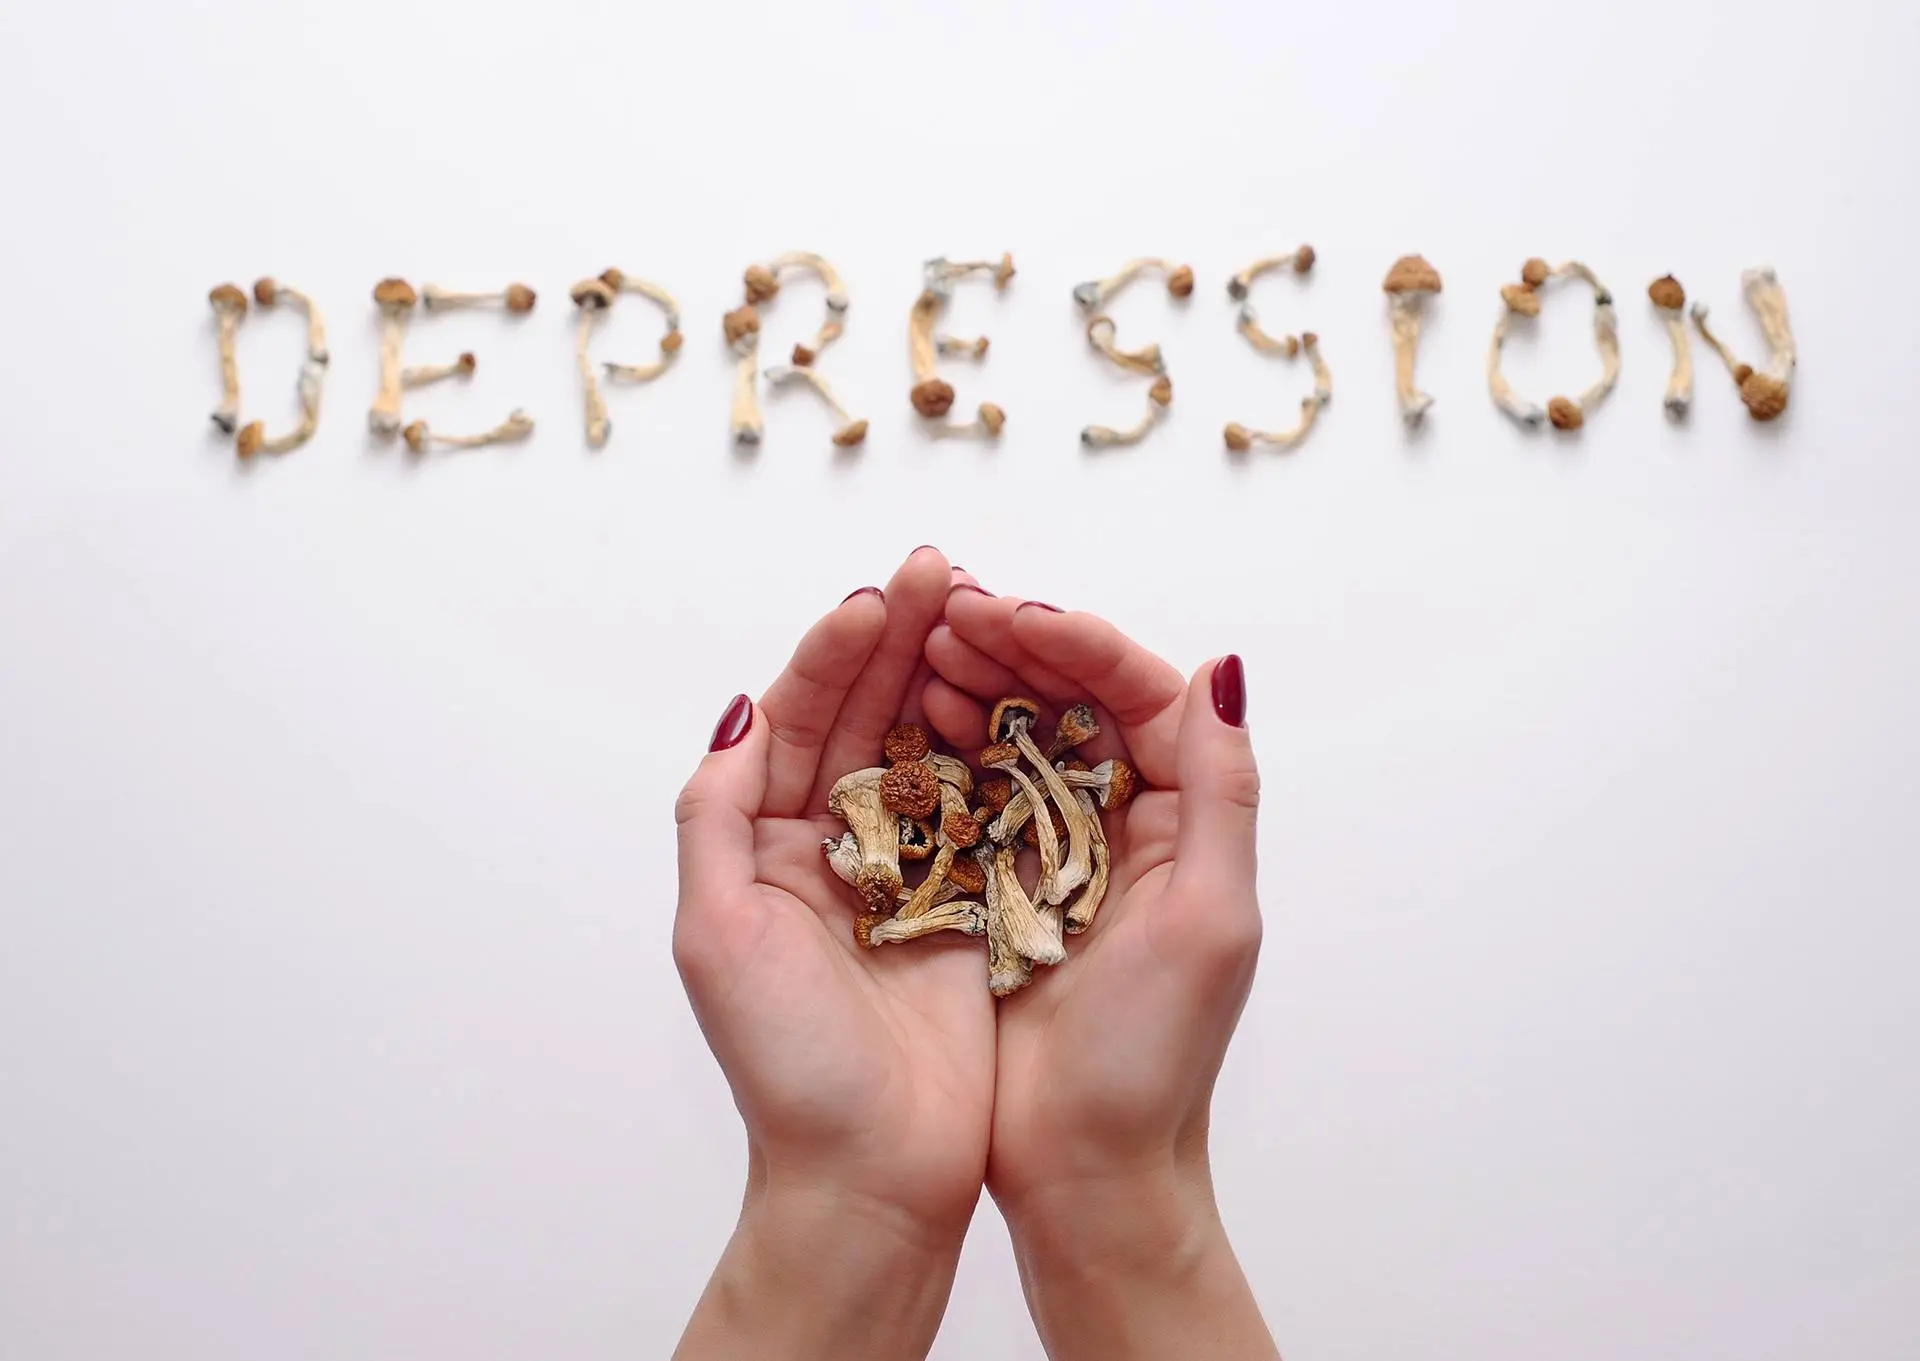 Hands holding psilocybin mushrooms arranged to spell the word 'depression'